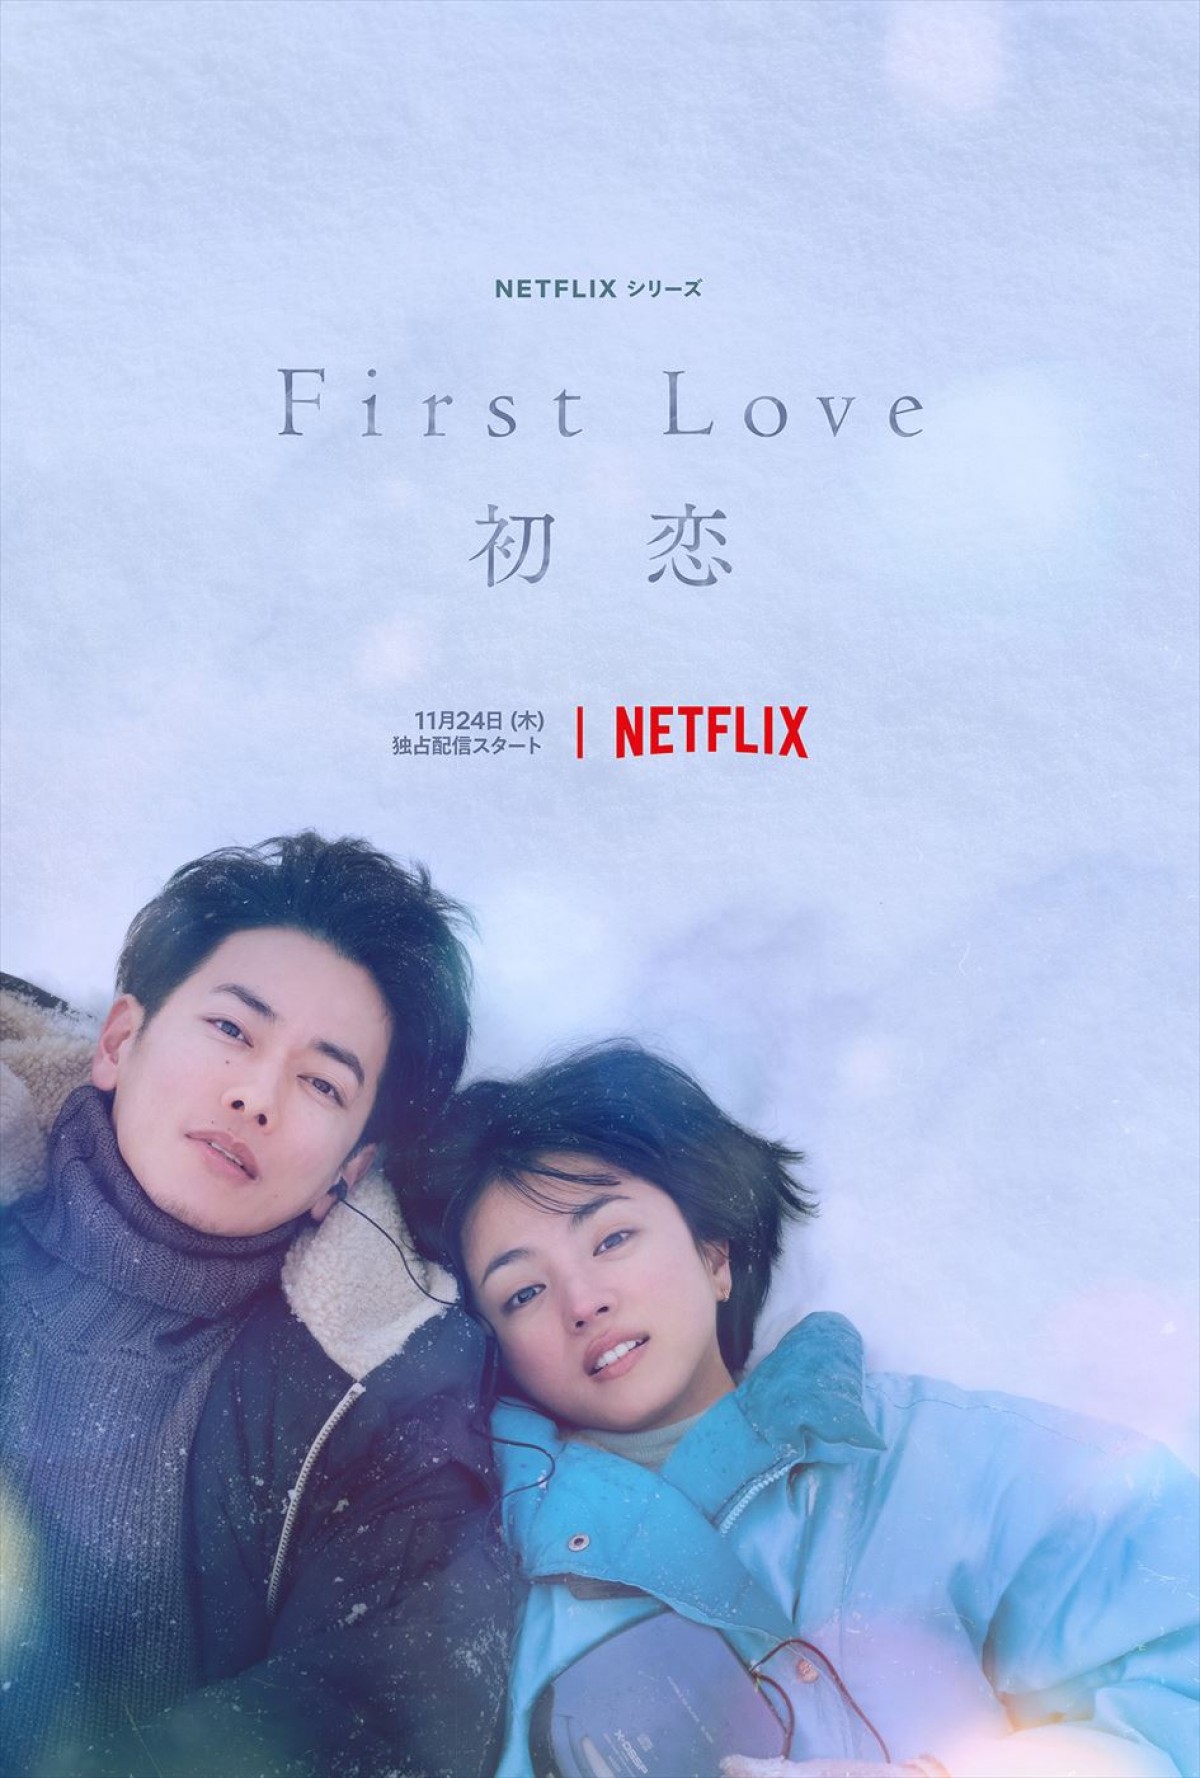 Netflixシリーズ『First Love 初恋』ティーザーアート